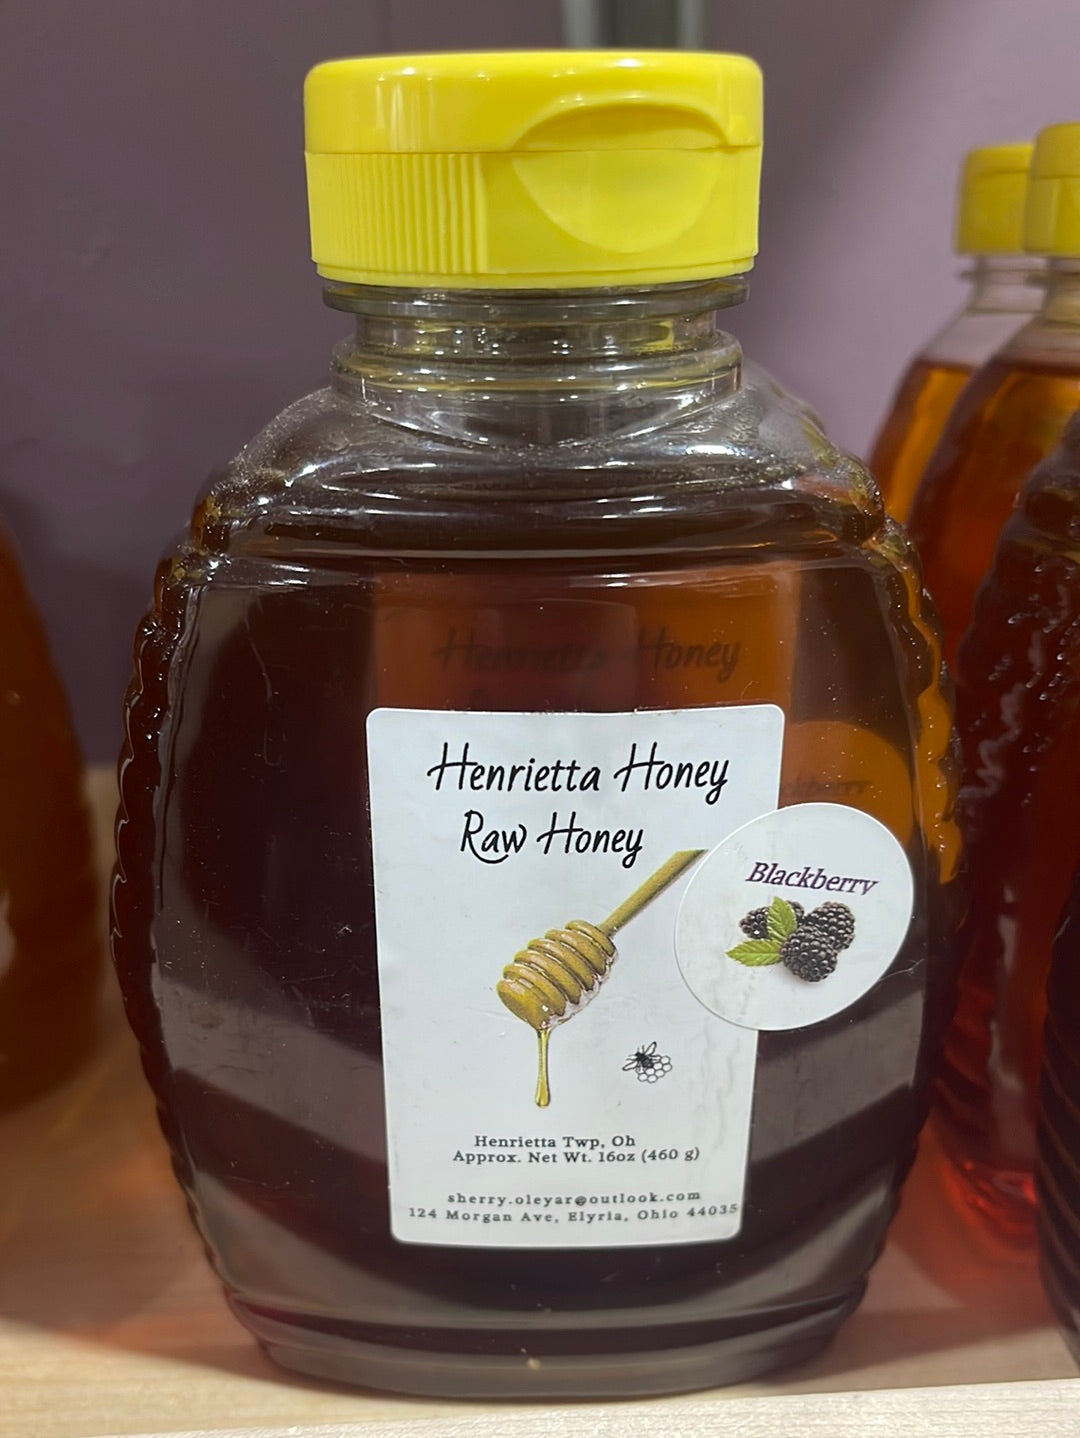 Award Winning Local Honey by Henrietta Honey  Robinson Family Soaps Blackberry  